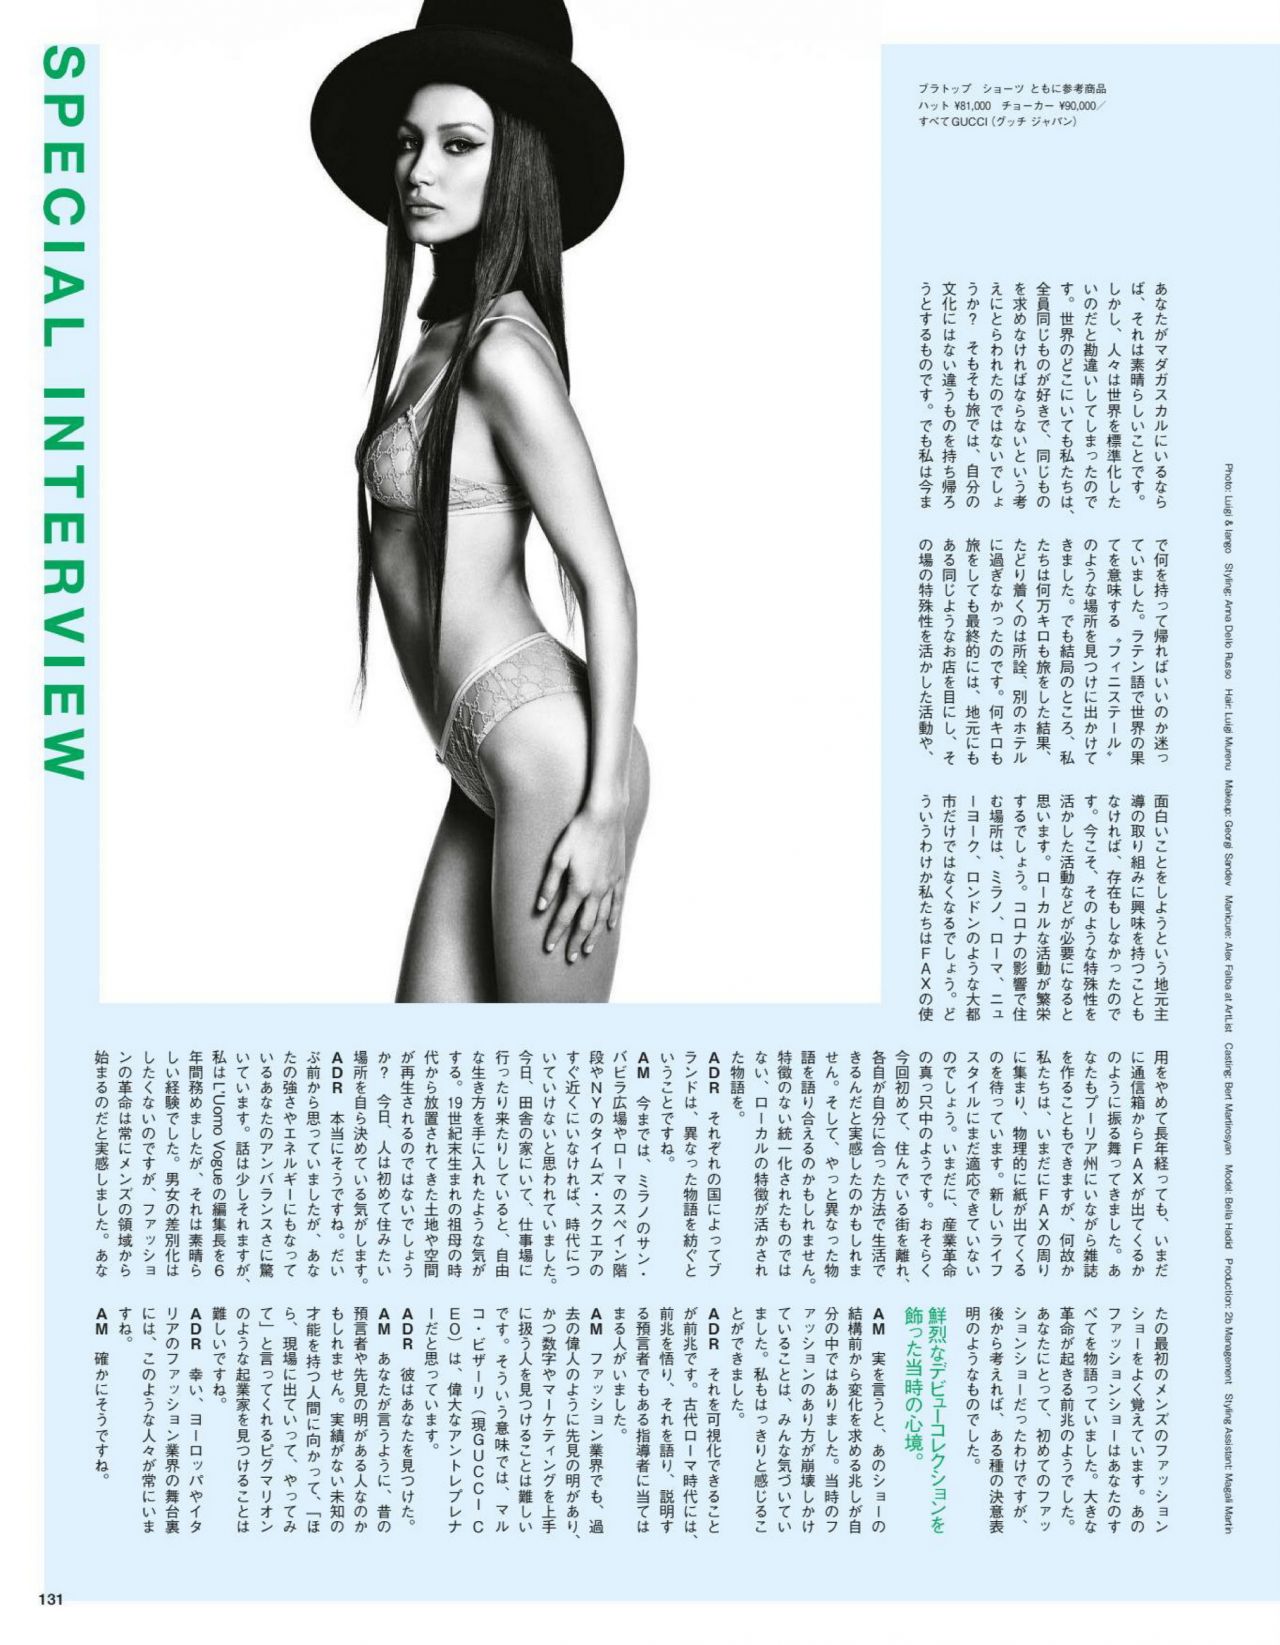 bella-hadid-vogue-japan-december-2020-issue-0.jpg